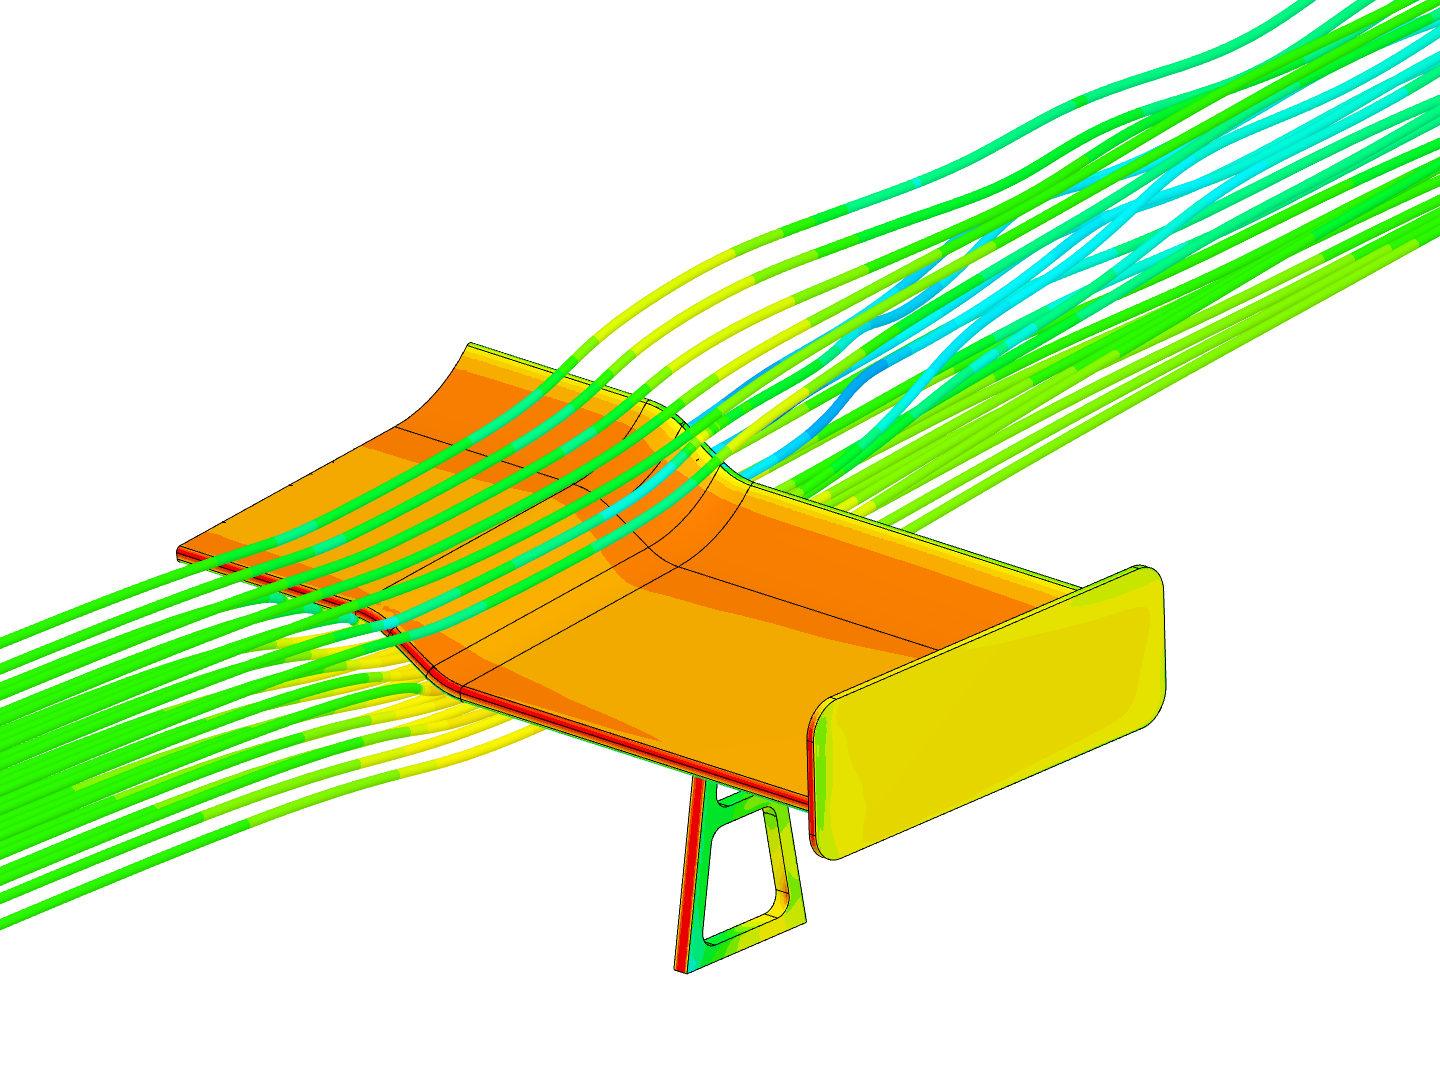 Airflow around s1223-il airfoil. image